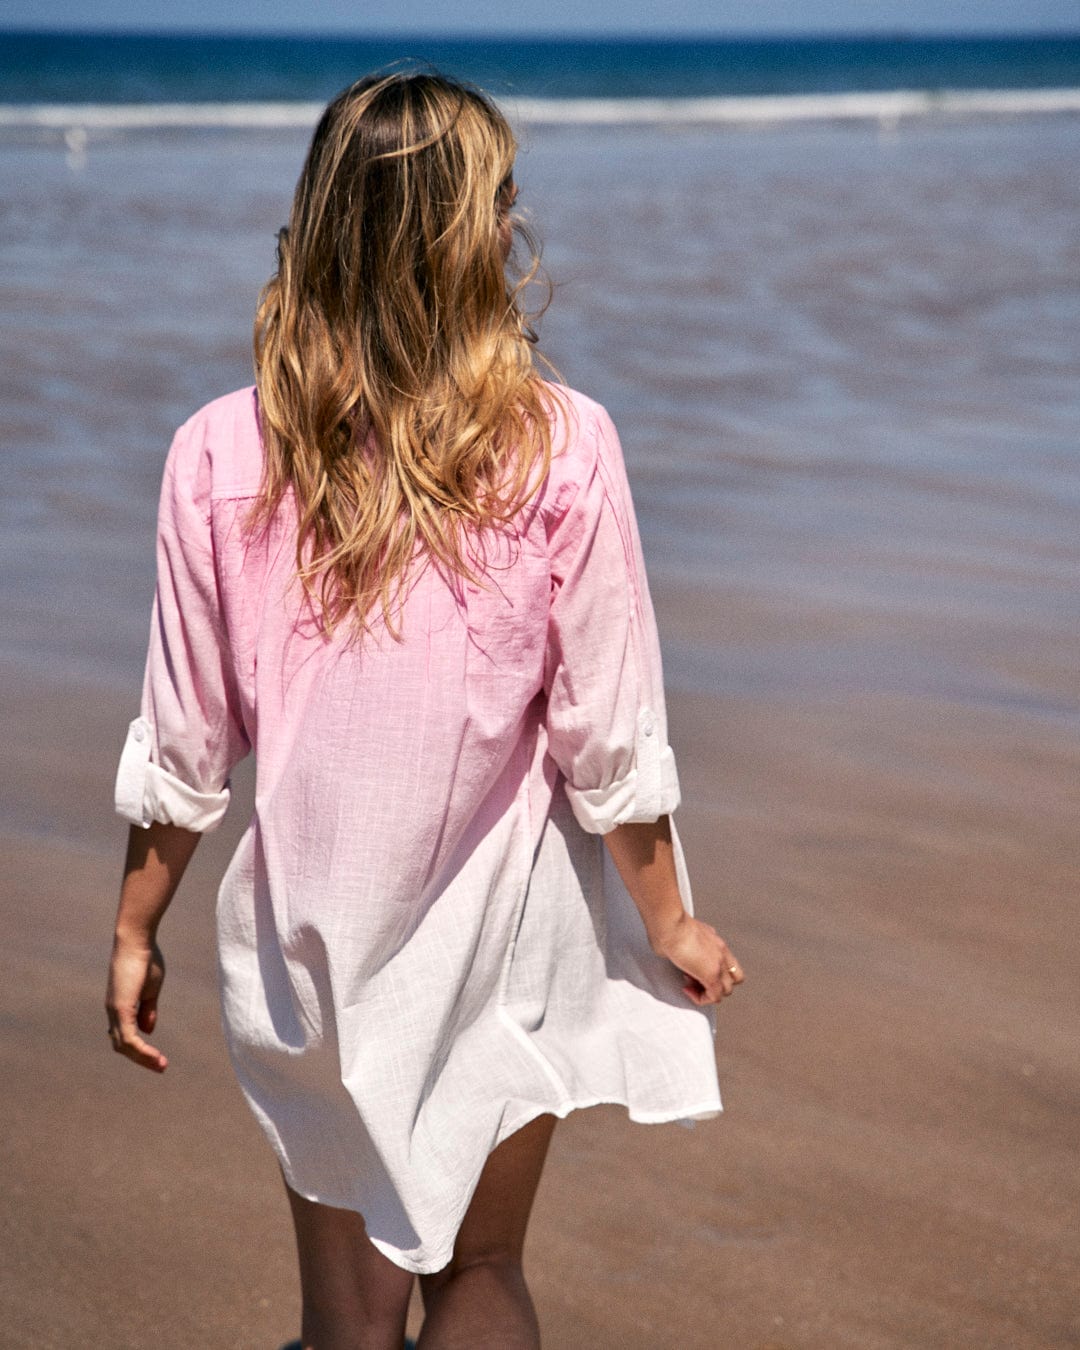 A woman with long hair walks on a beach, wearing a Saltrock Karthi - Womens Long Sleeve Shirt - Pink/White.